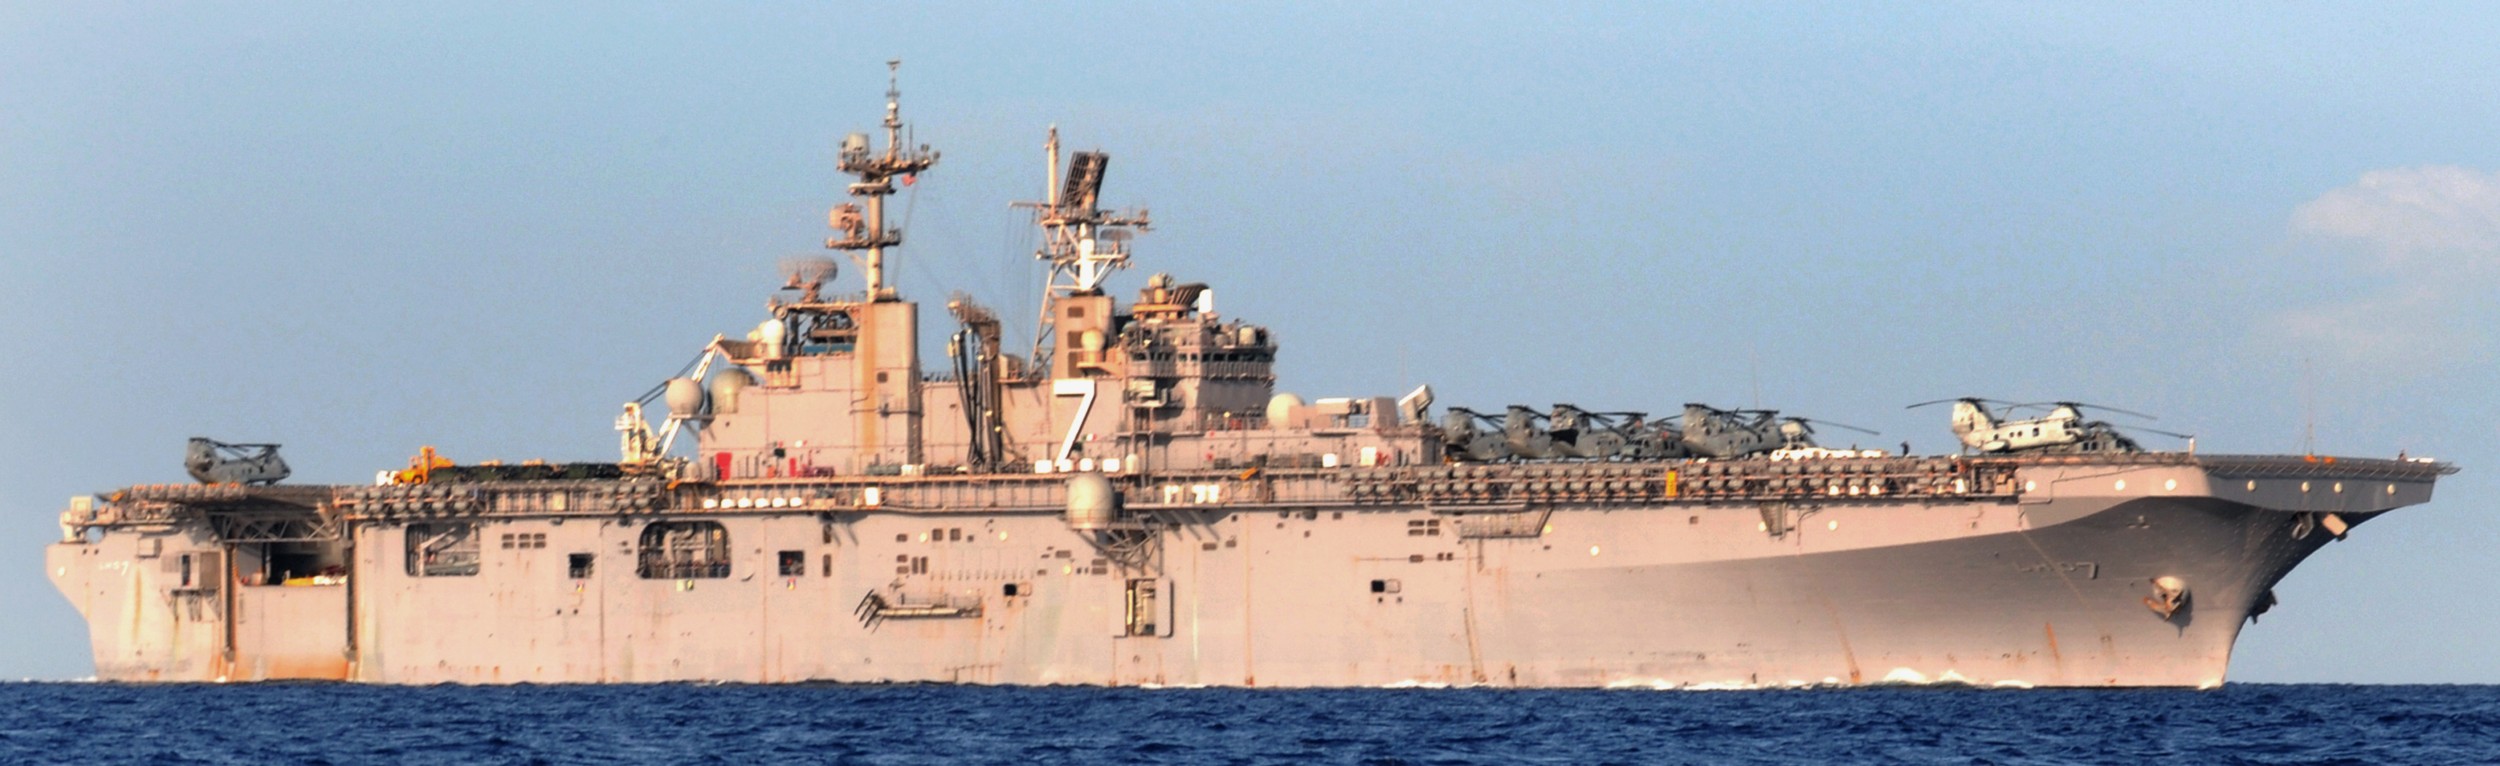 lhd-7 uss iwo jima wasp class amphibious assault ship dock landing helicopter hmm-774 marines 86